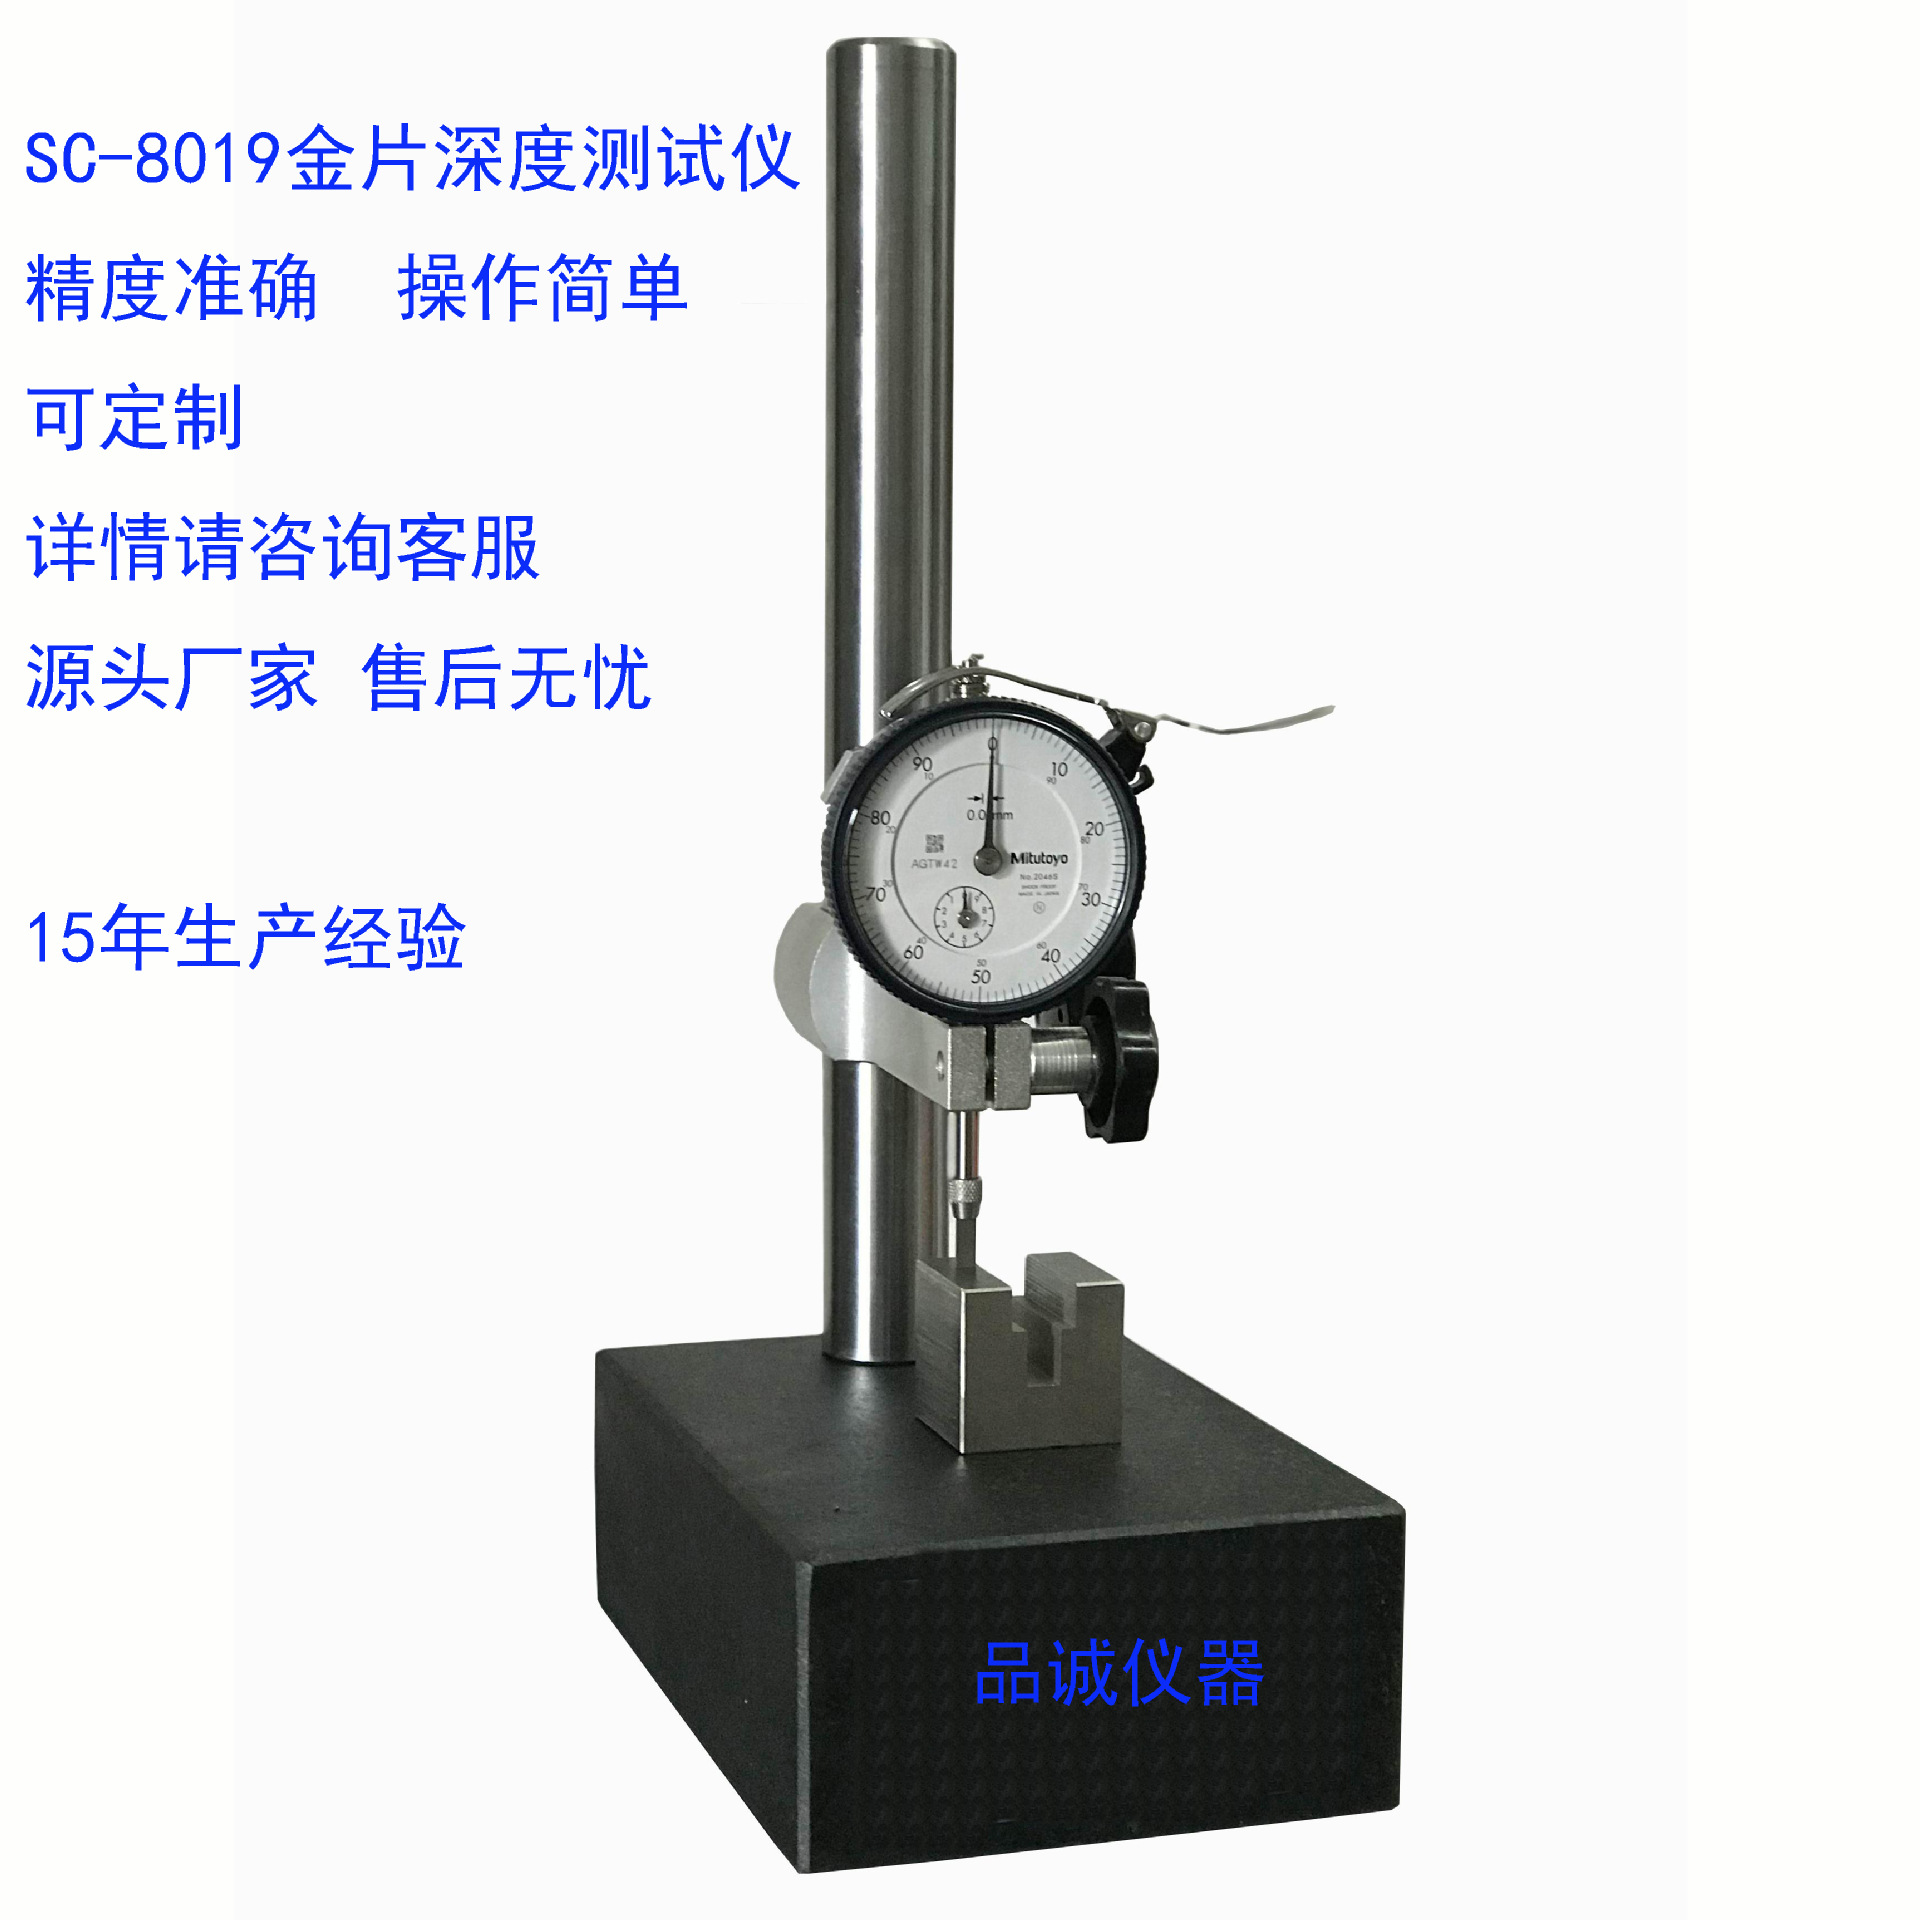 PLUG金片深度测试仪   电话水晶头金片高度测试机SC-8019价格优惠